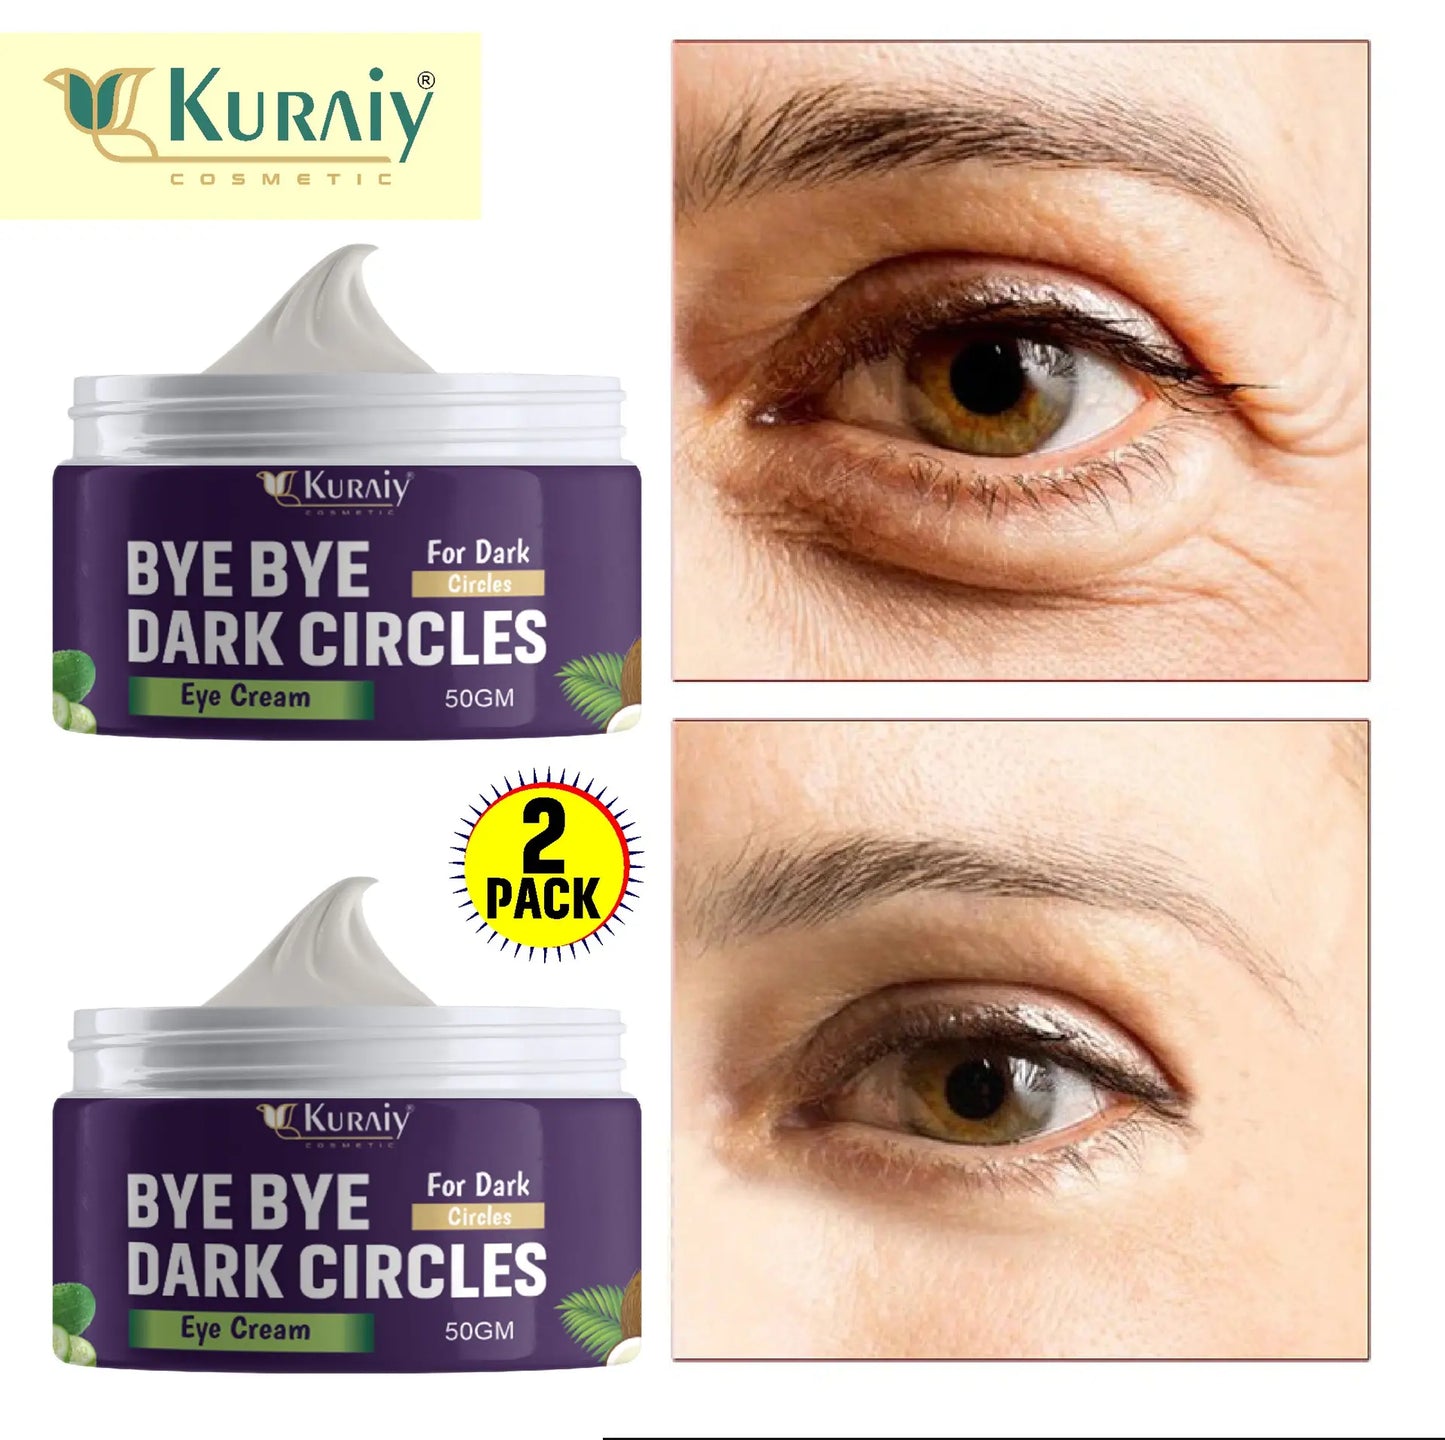 Bye Bye Dark Circle Cream- Korean Made